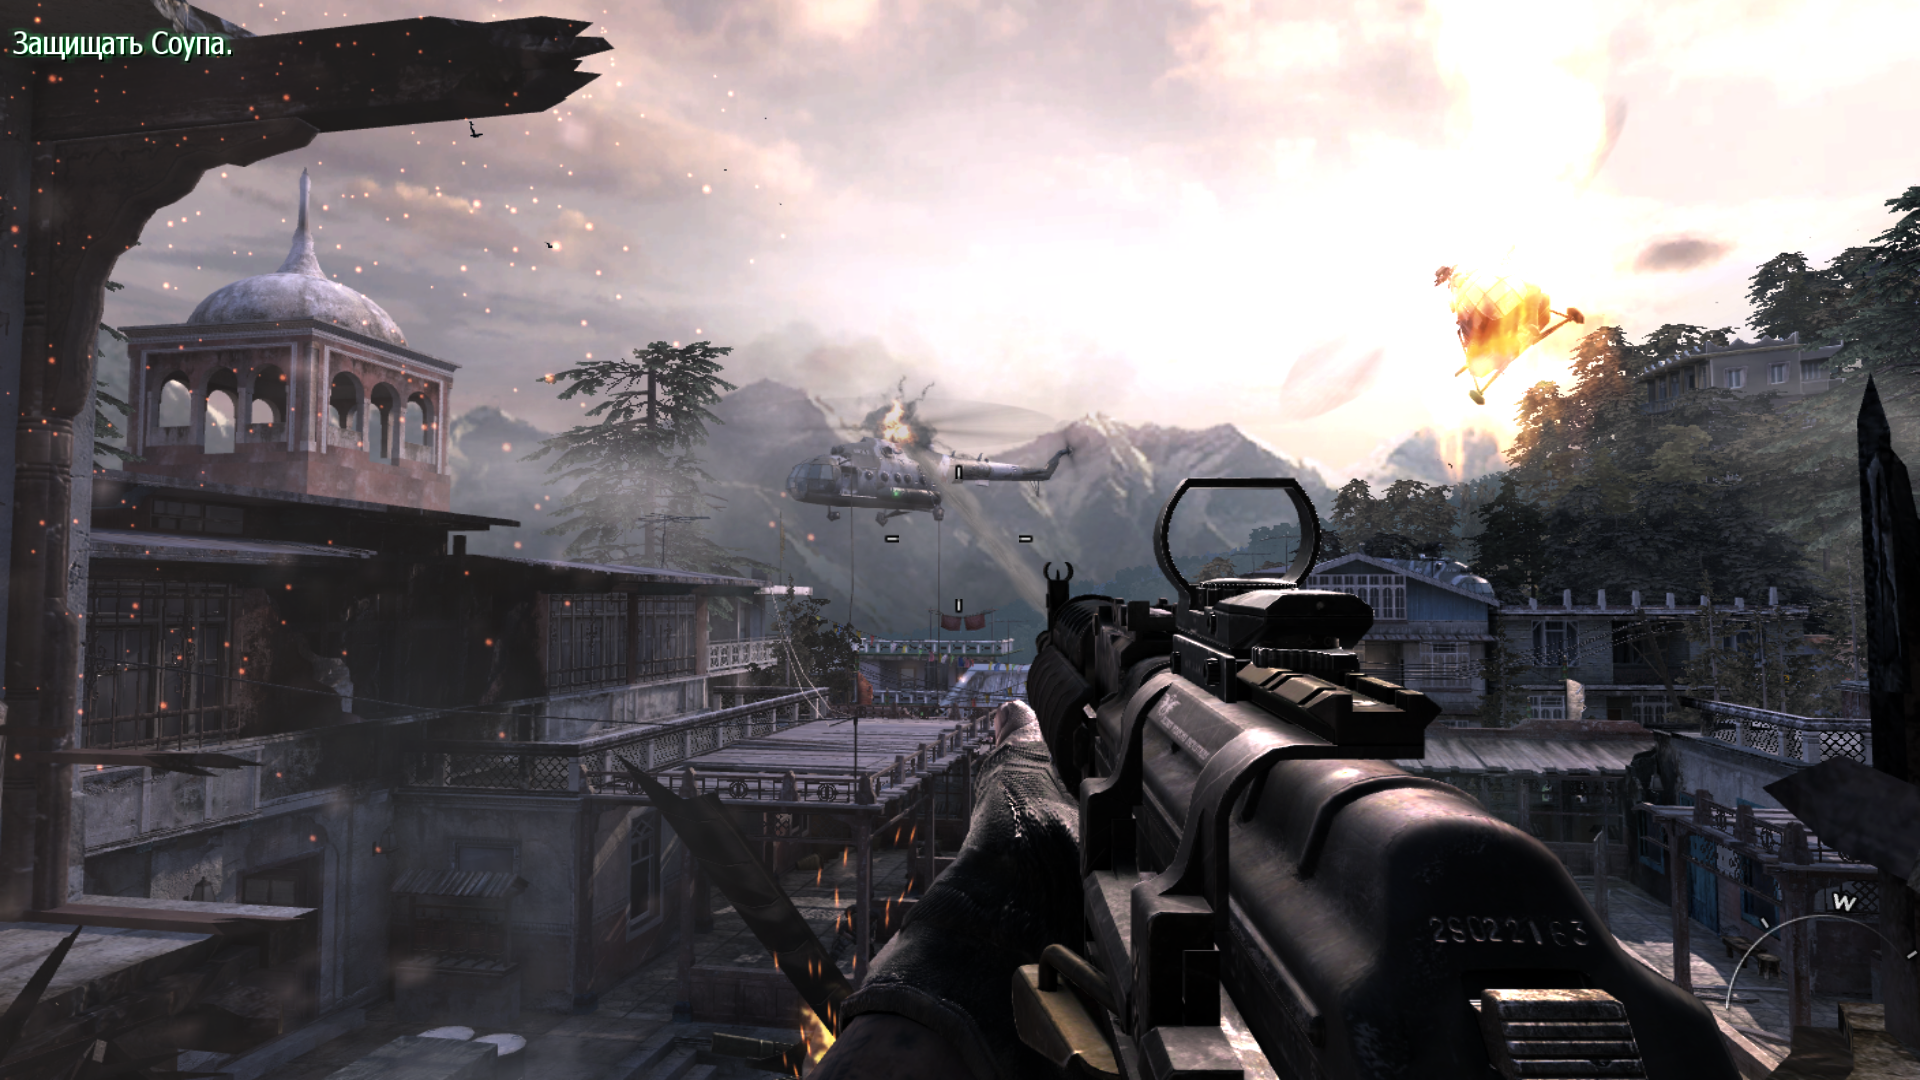 Call duty mw3 игры. Call of Duty: Modern Warfare 3. Call of Duty mw3. Калл оф дьюти Модерн варфаре 3. Калл оф дьюти Модерн варфэйр 3.